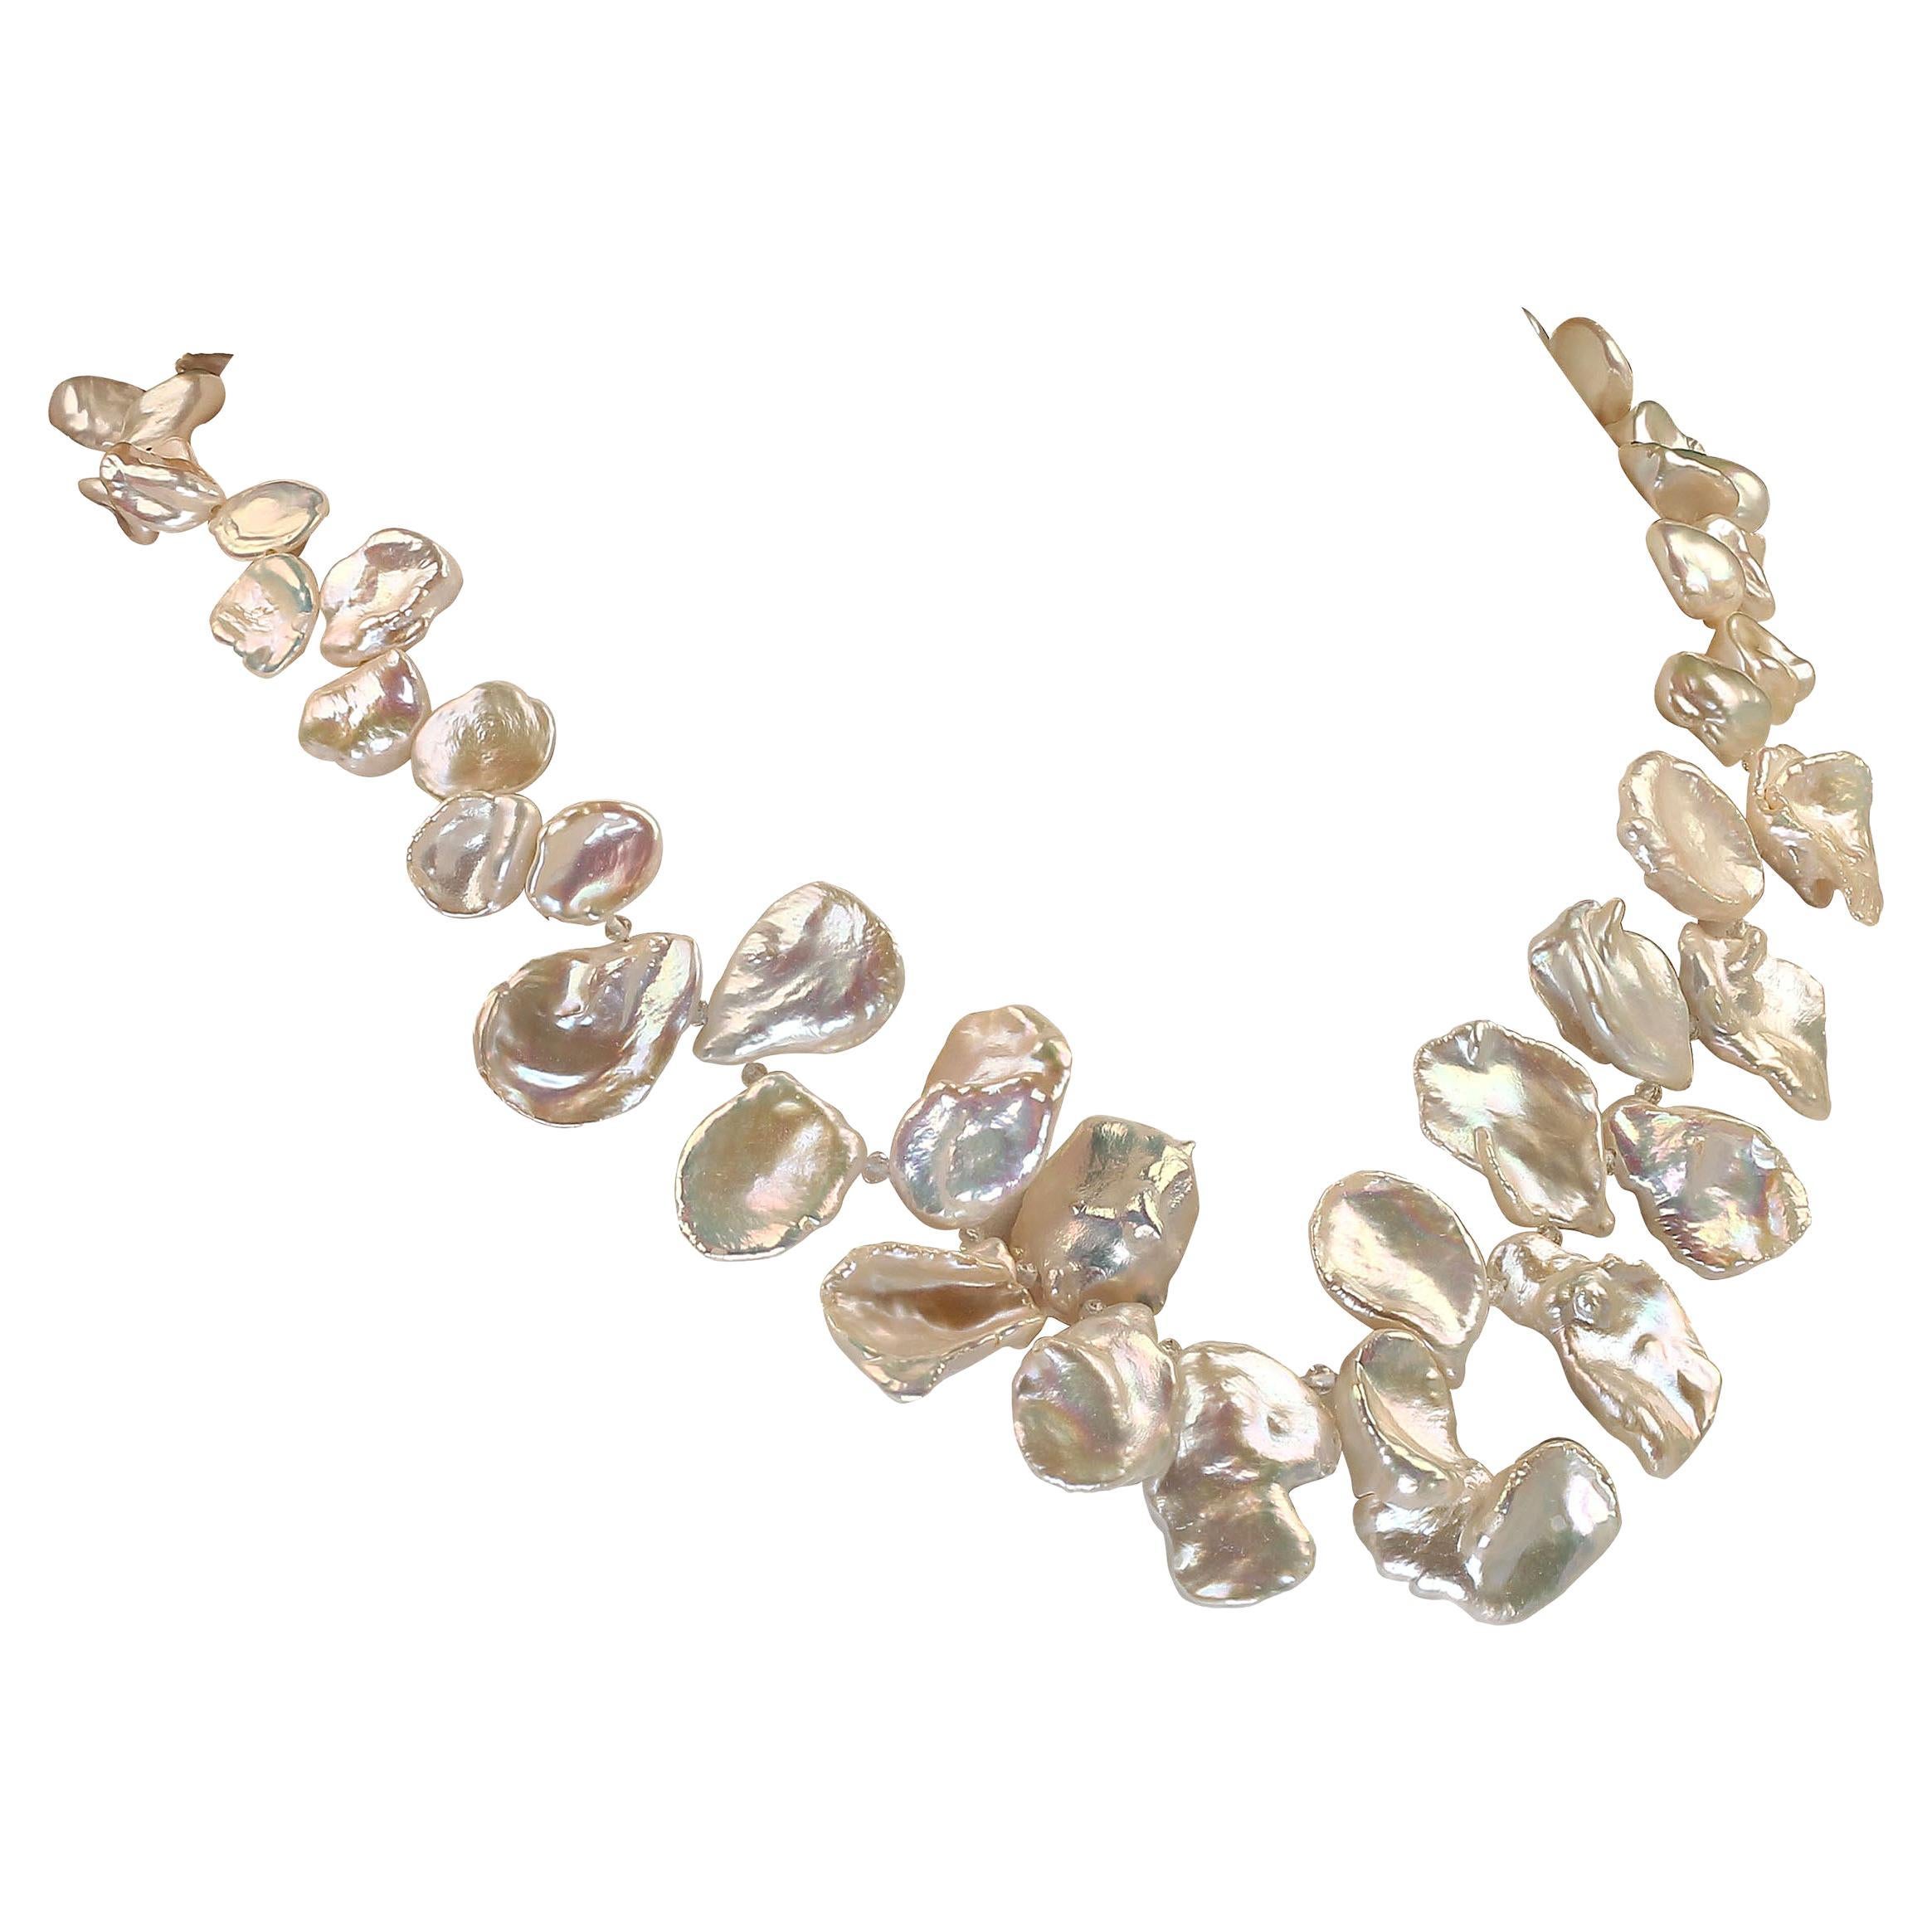 AJD Collar White Iridescent Keshi Pearls Sterling Toggle June Birthstone